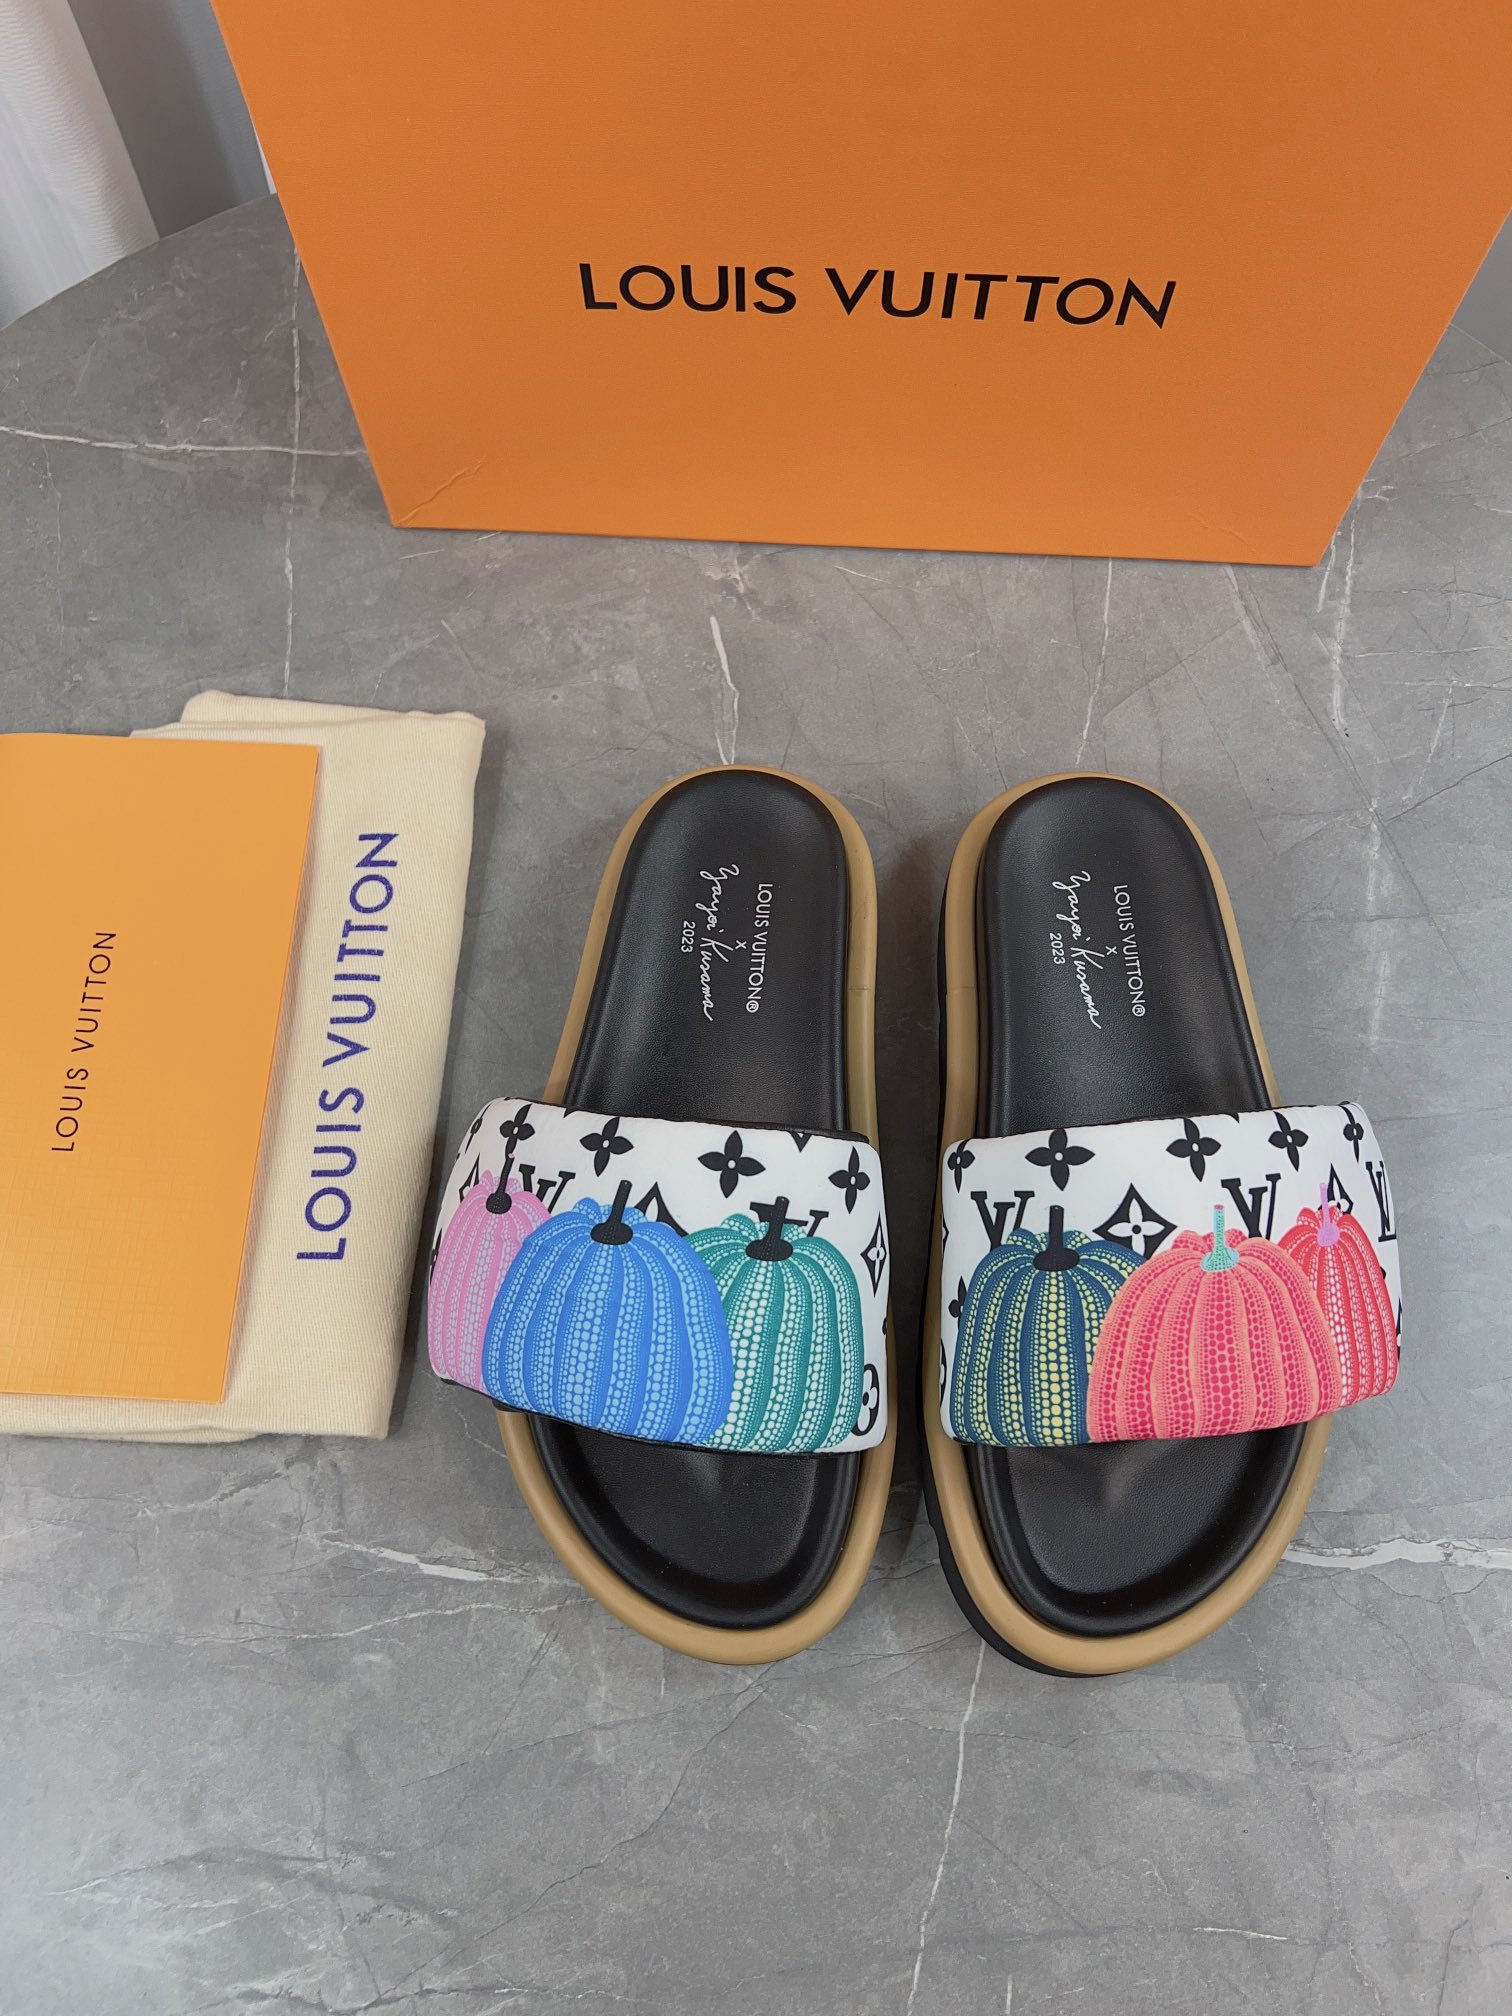 1:1
 Louis Vuitton Shoes Slippers cheap online Best Designer
 Grey Khaki White Fabric Rubber Sheepskin